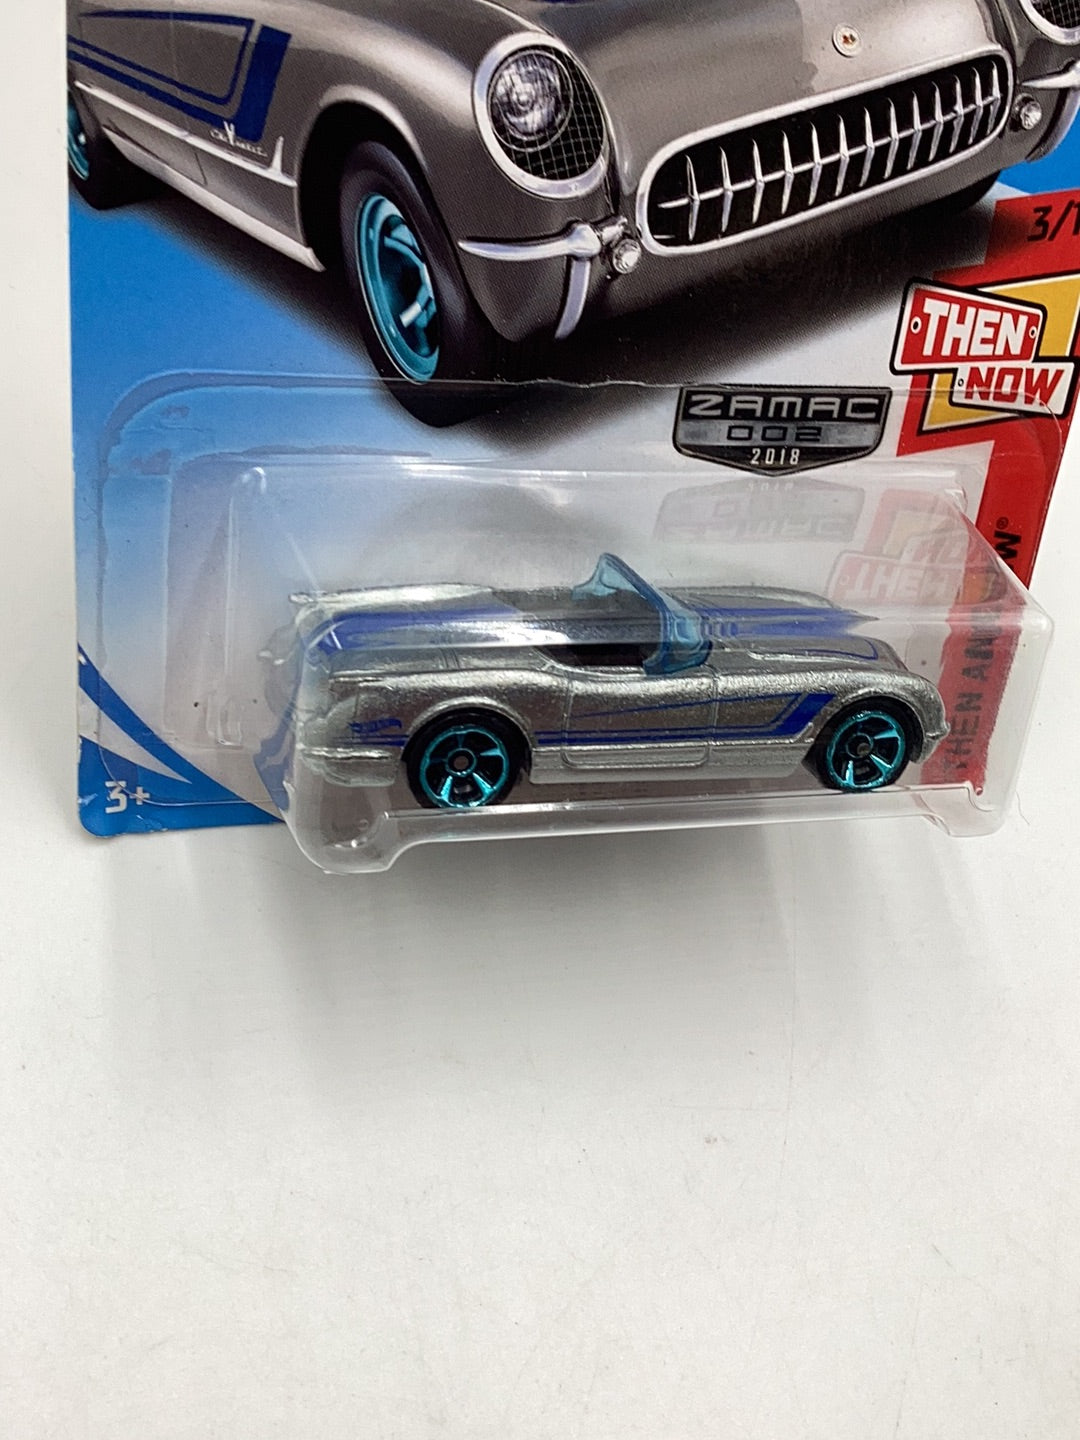 2018 hot wheels Zamac #2 55 Corvette 145E